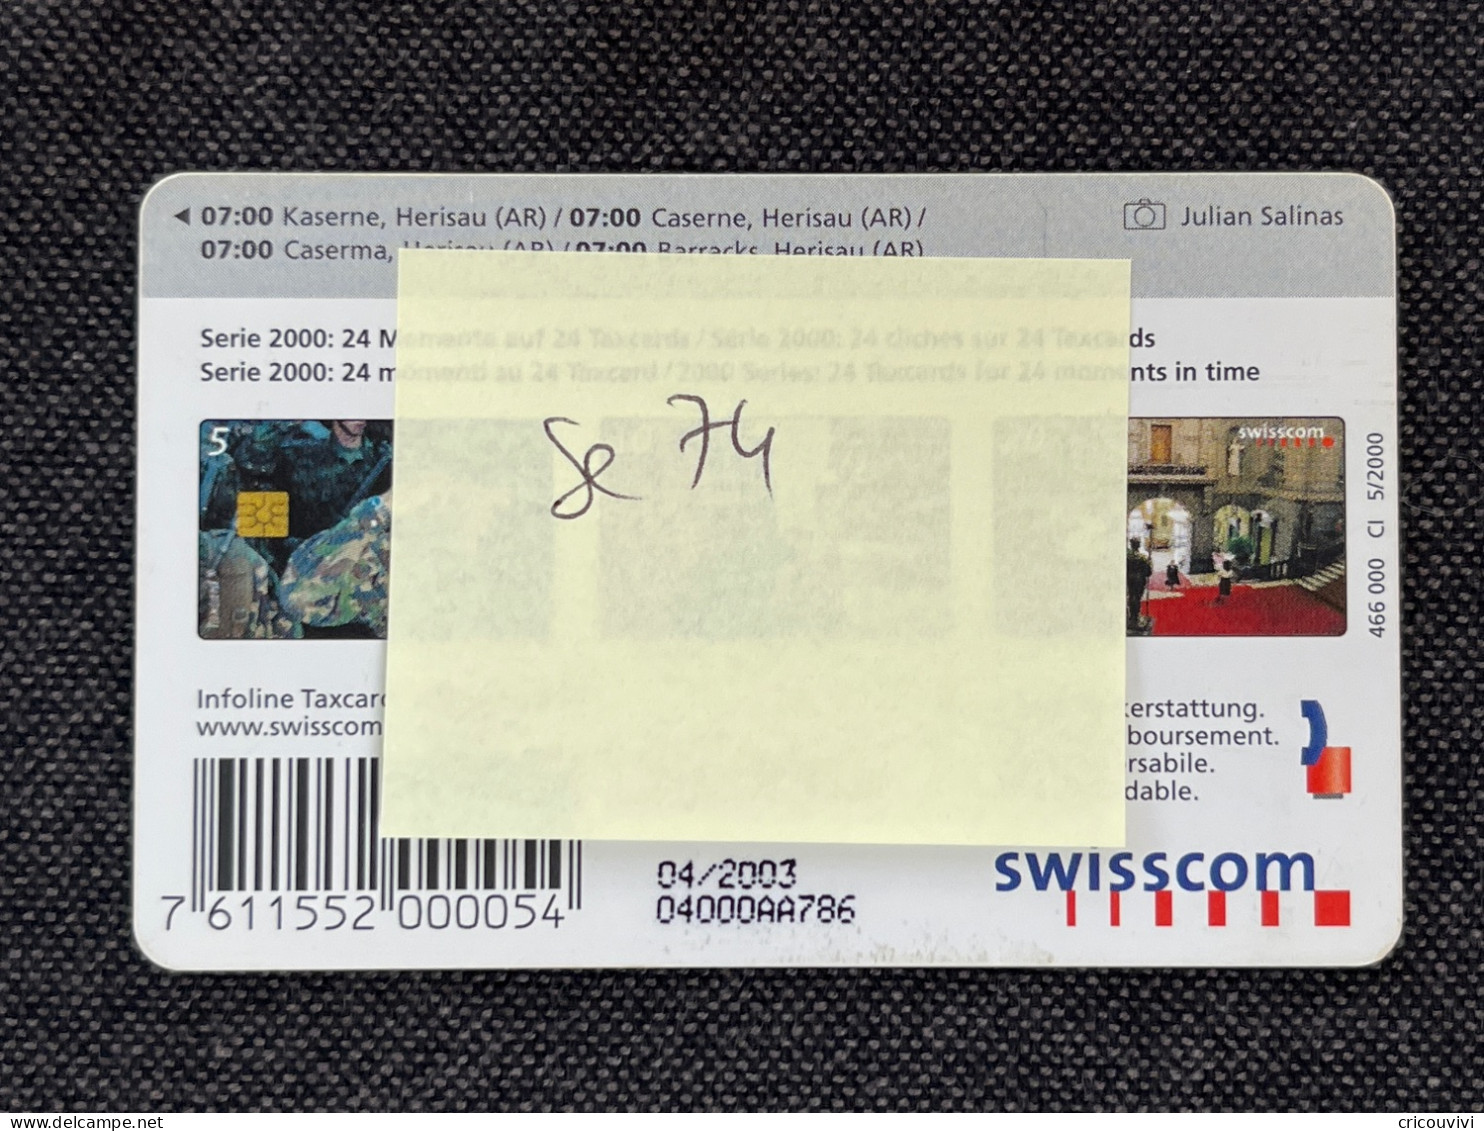 Se74 - Switzerland